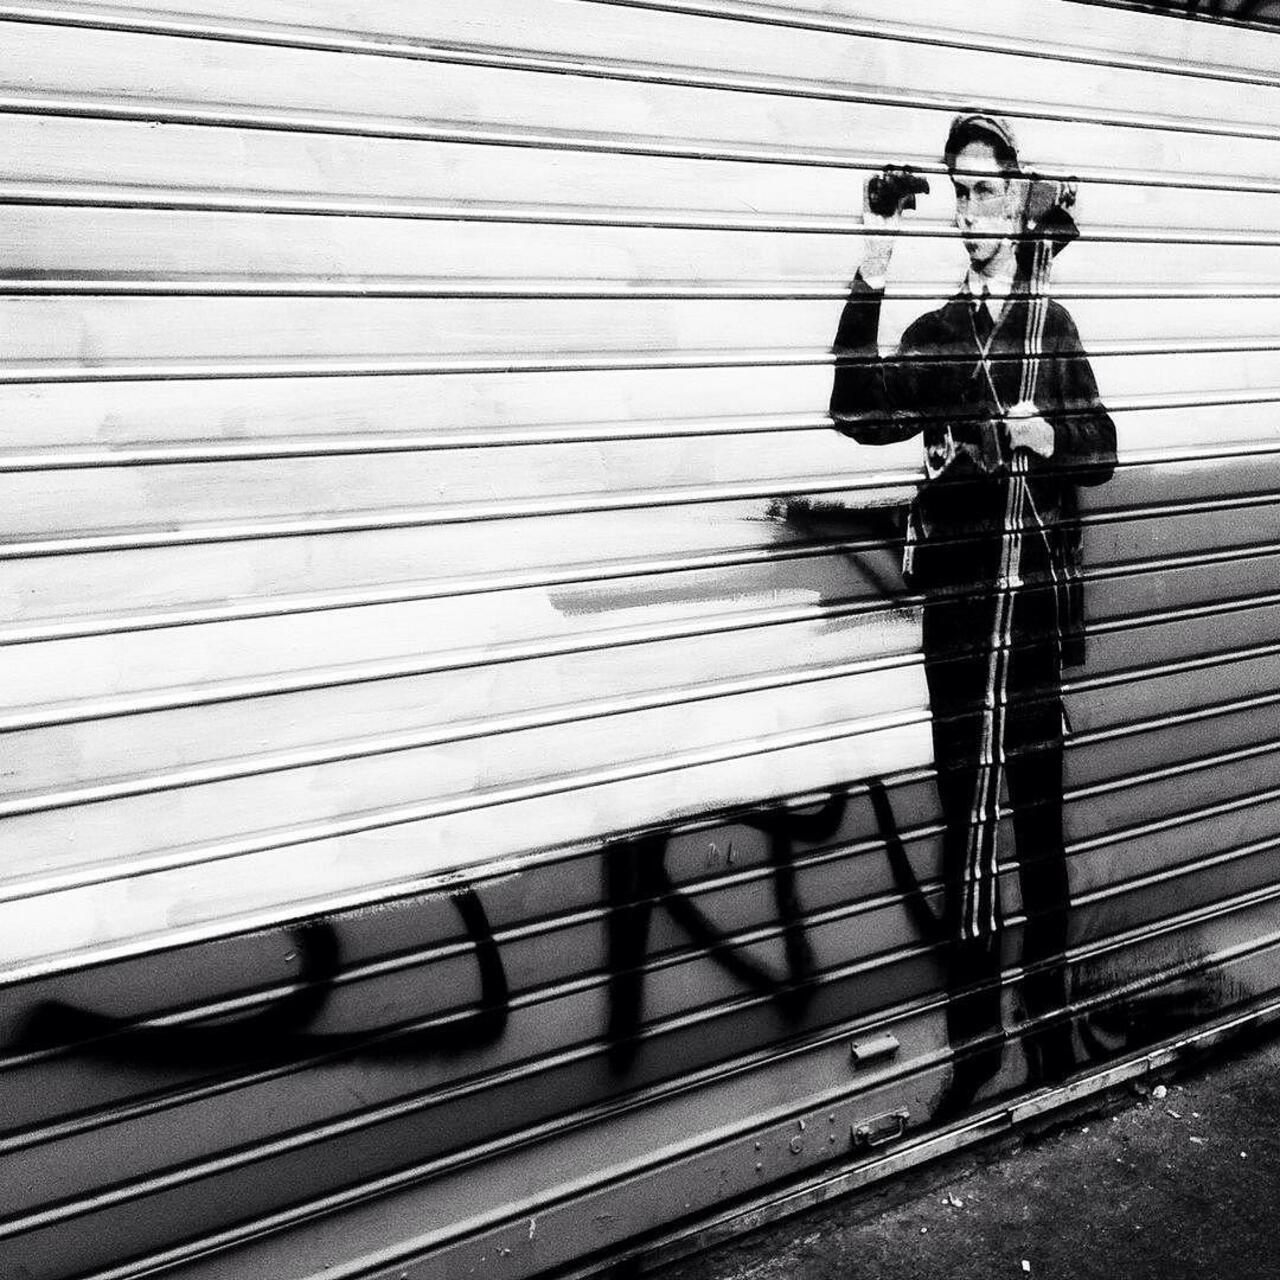 #Paris #graffiti photo by @noamzucker http://ift.tt/1ZOxAYG #StreetArt http://t.co/UDowD4z2s0